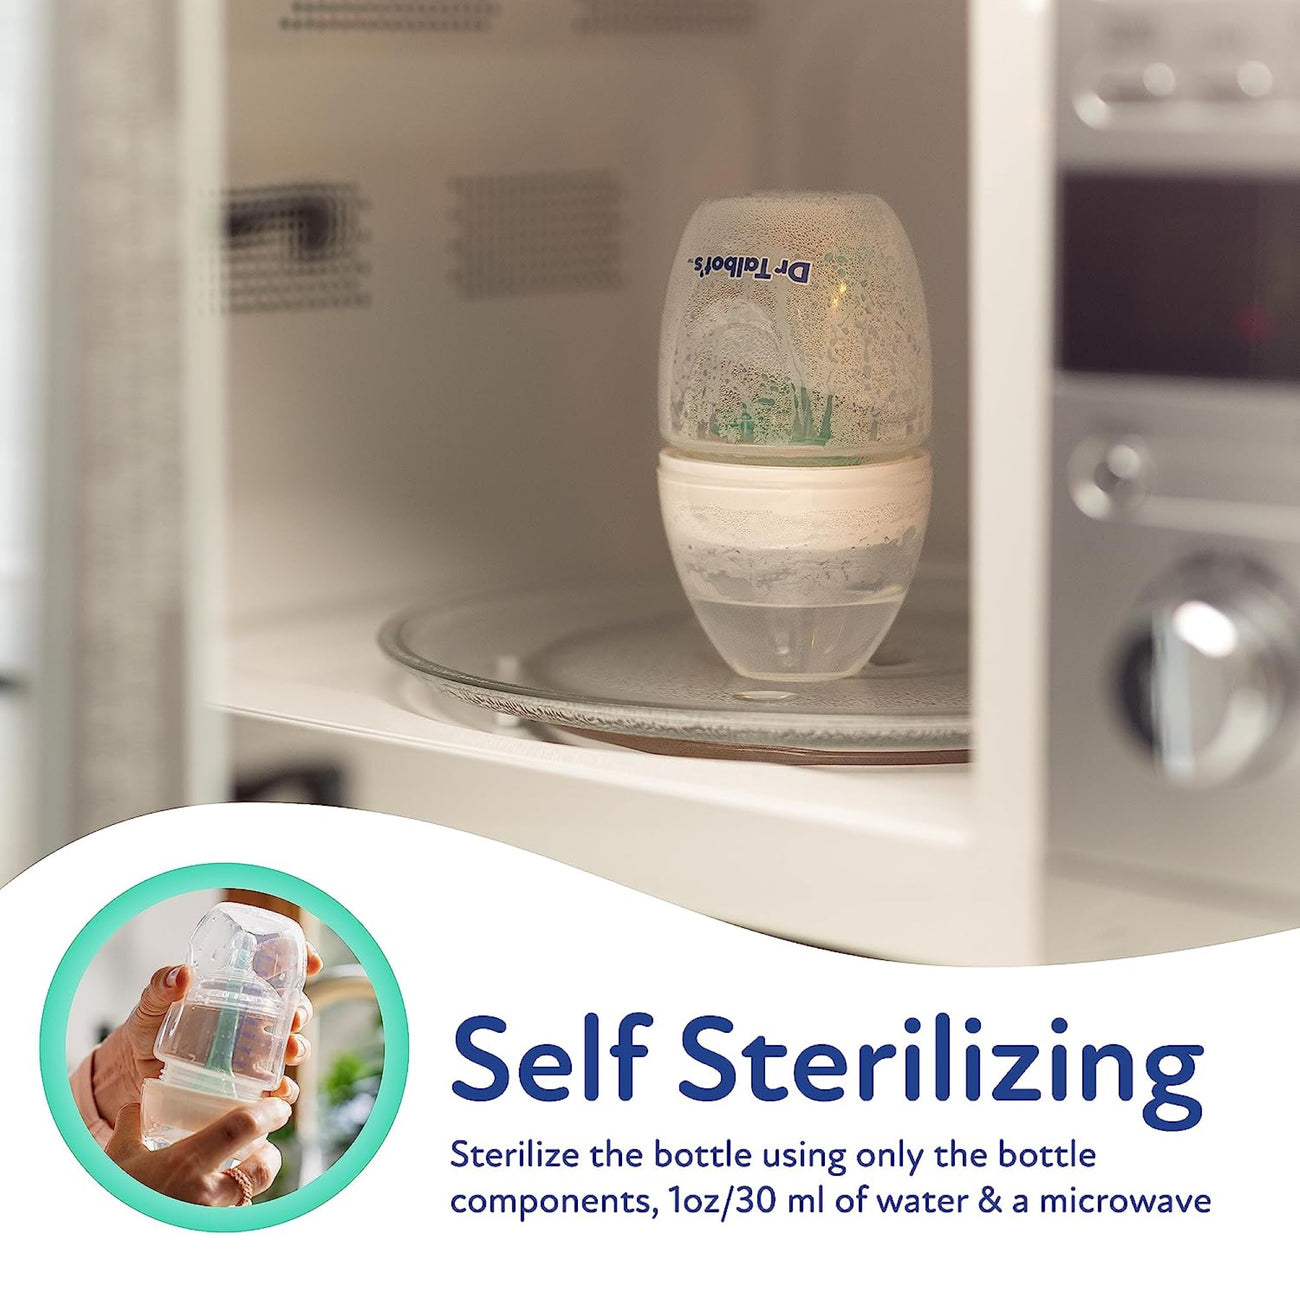 Self-Sterilizing Anti-Colic Bottle (2 Pack) - 6 oz